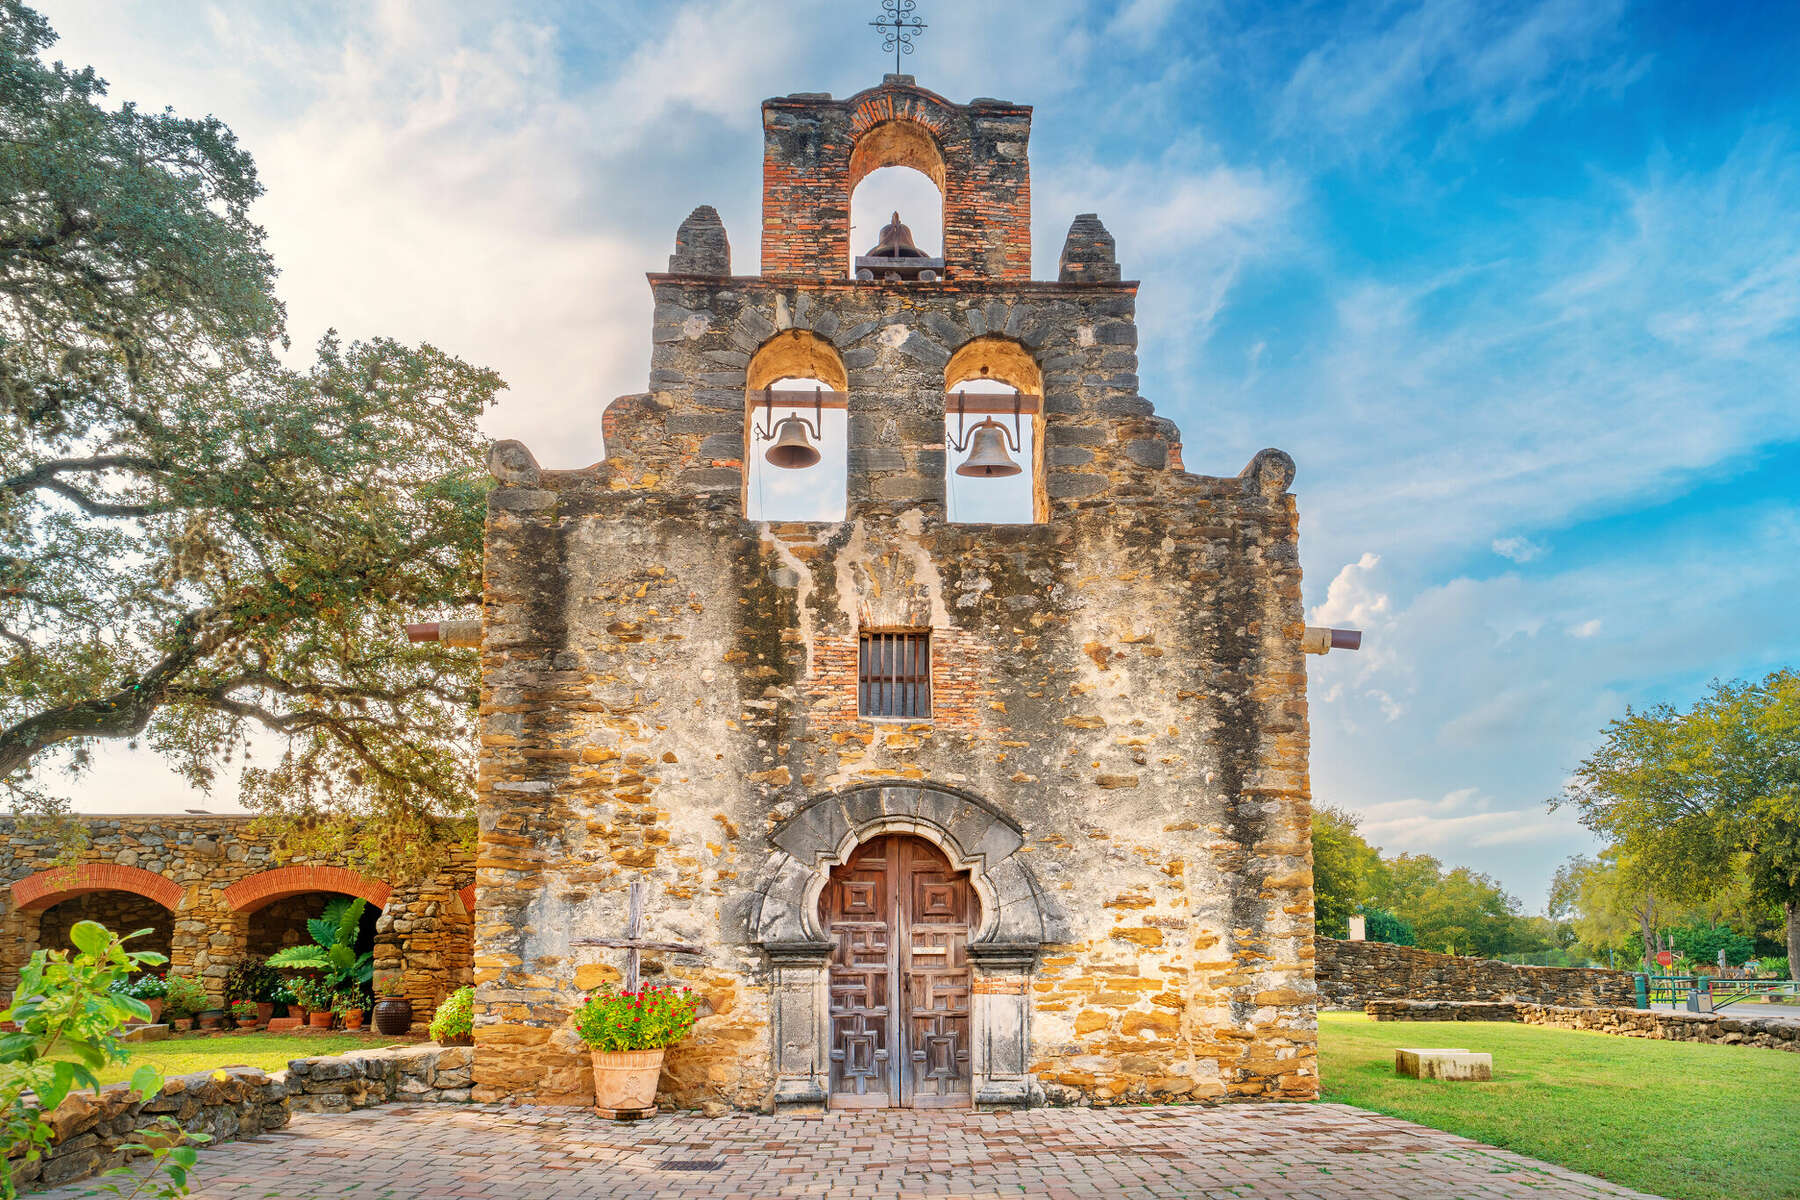 Pets - San Antonio Missions National Historical Park (U.S.